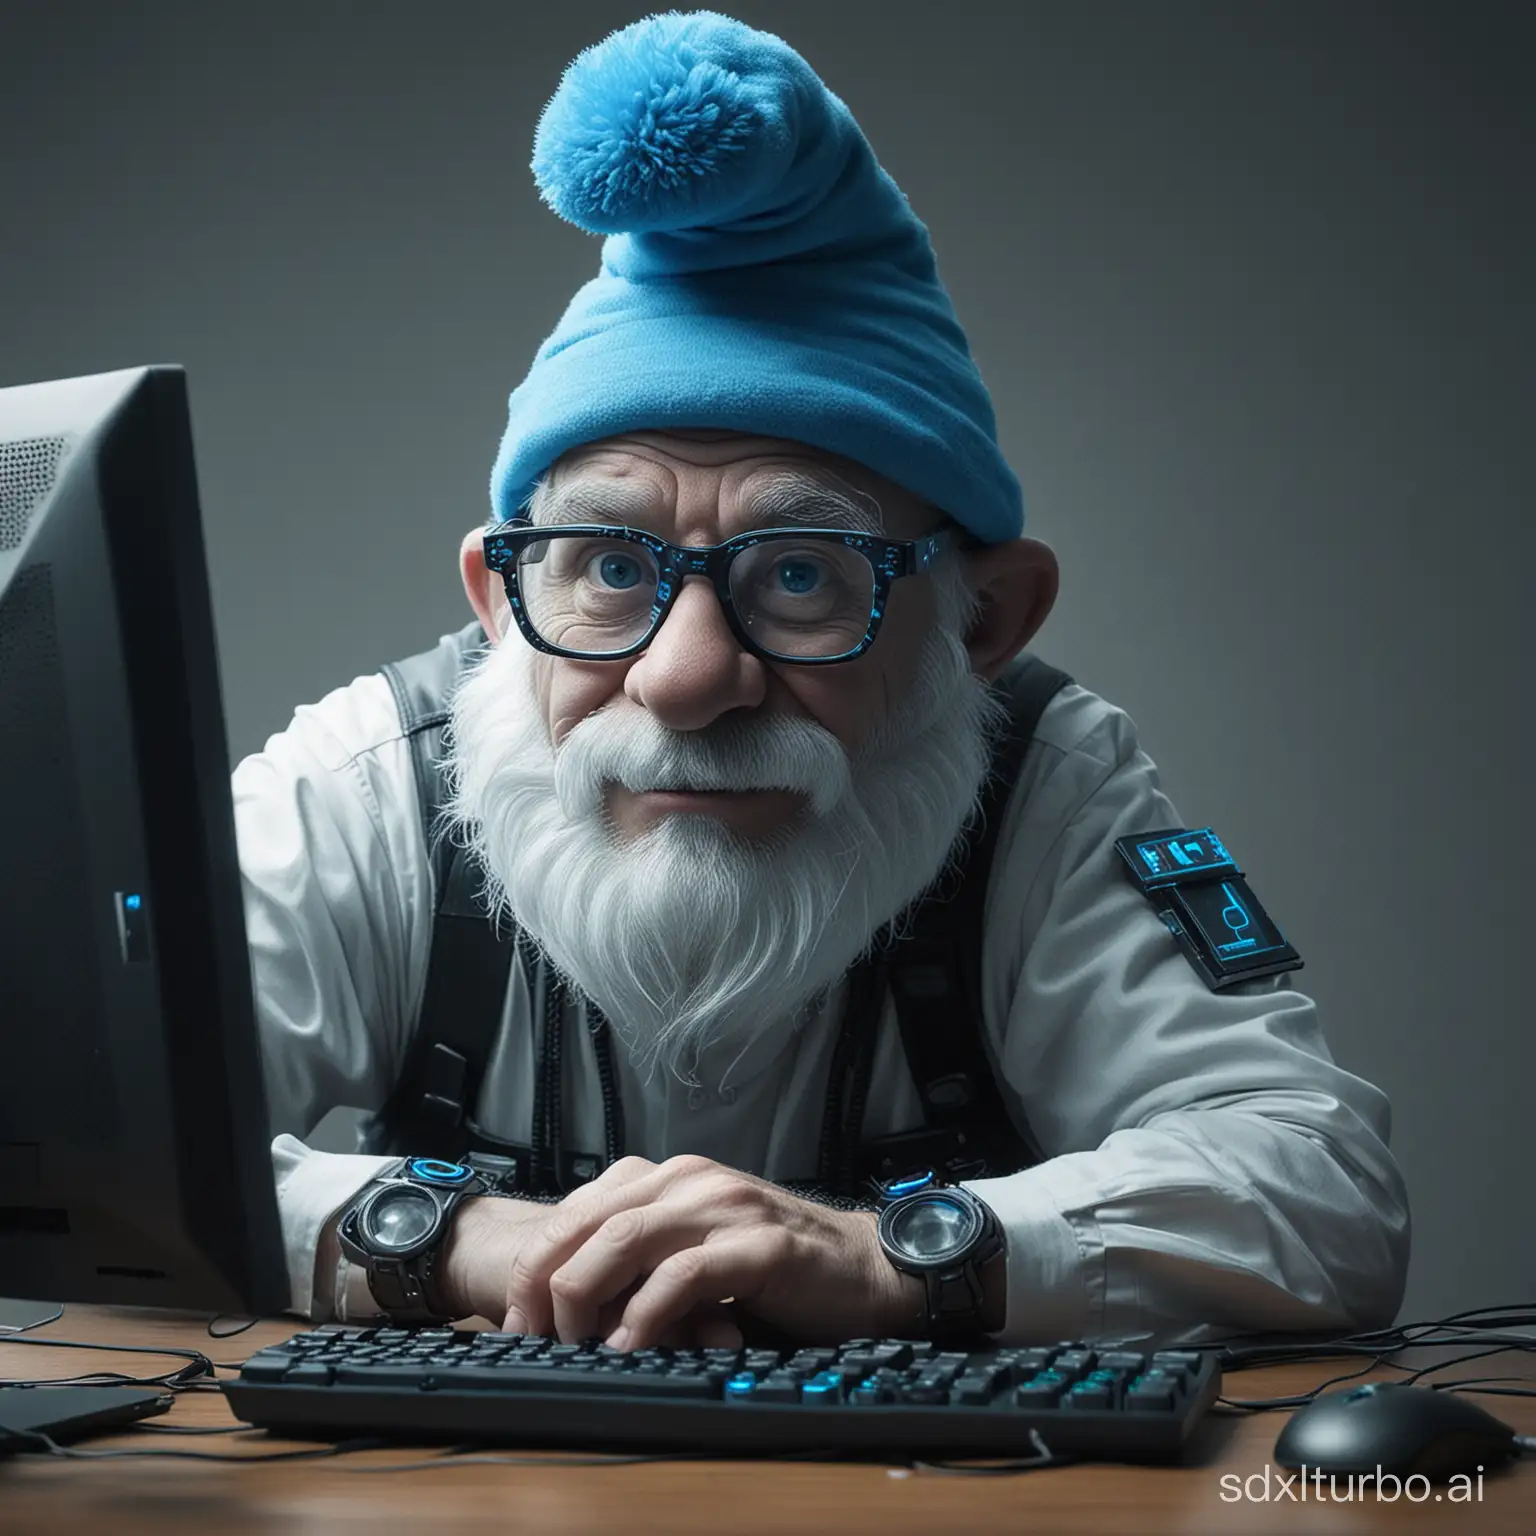 Poppa smurf wearing glasses hacking a computer

cyberpunk, future, led
